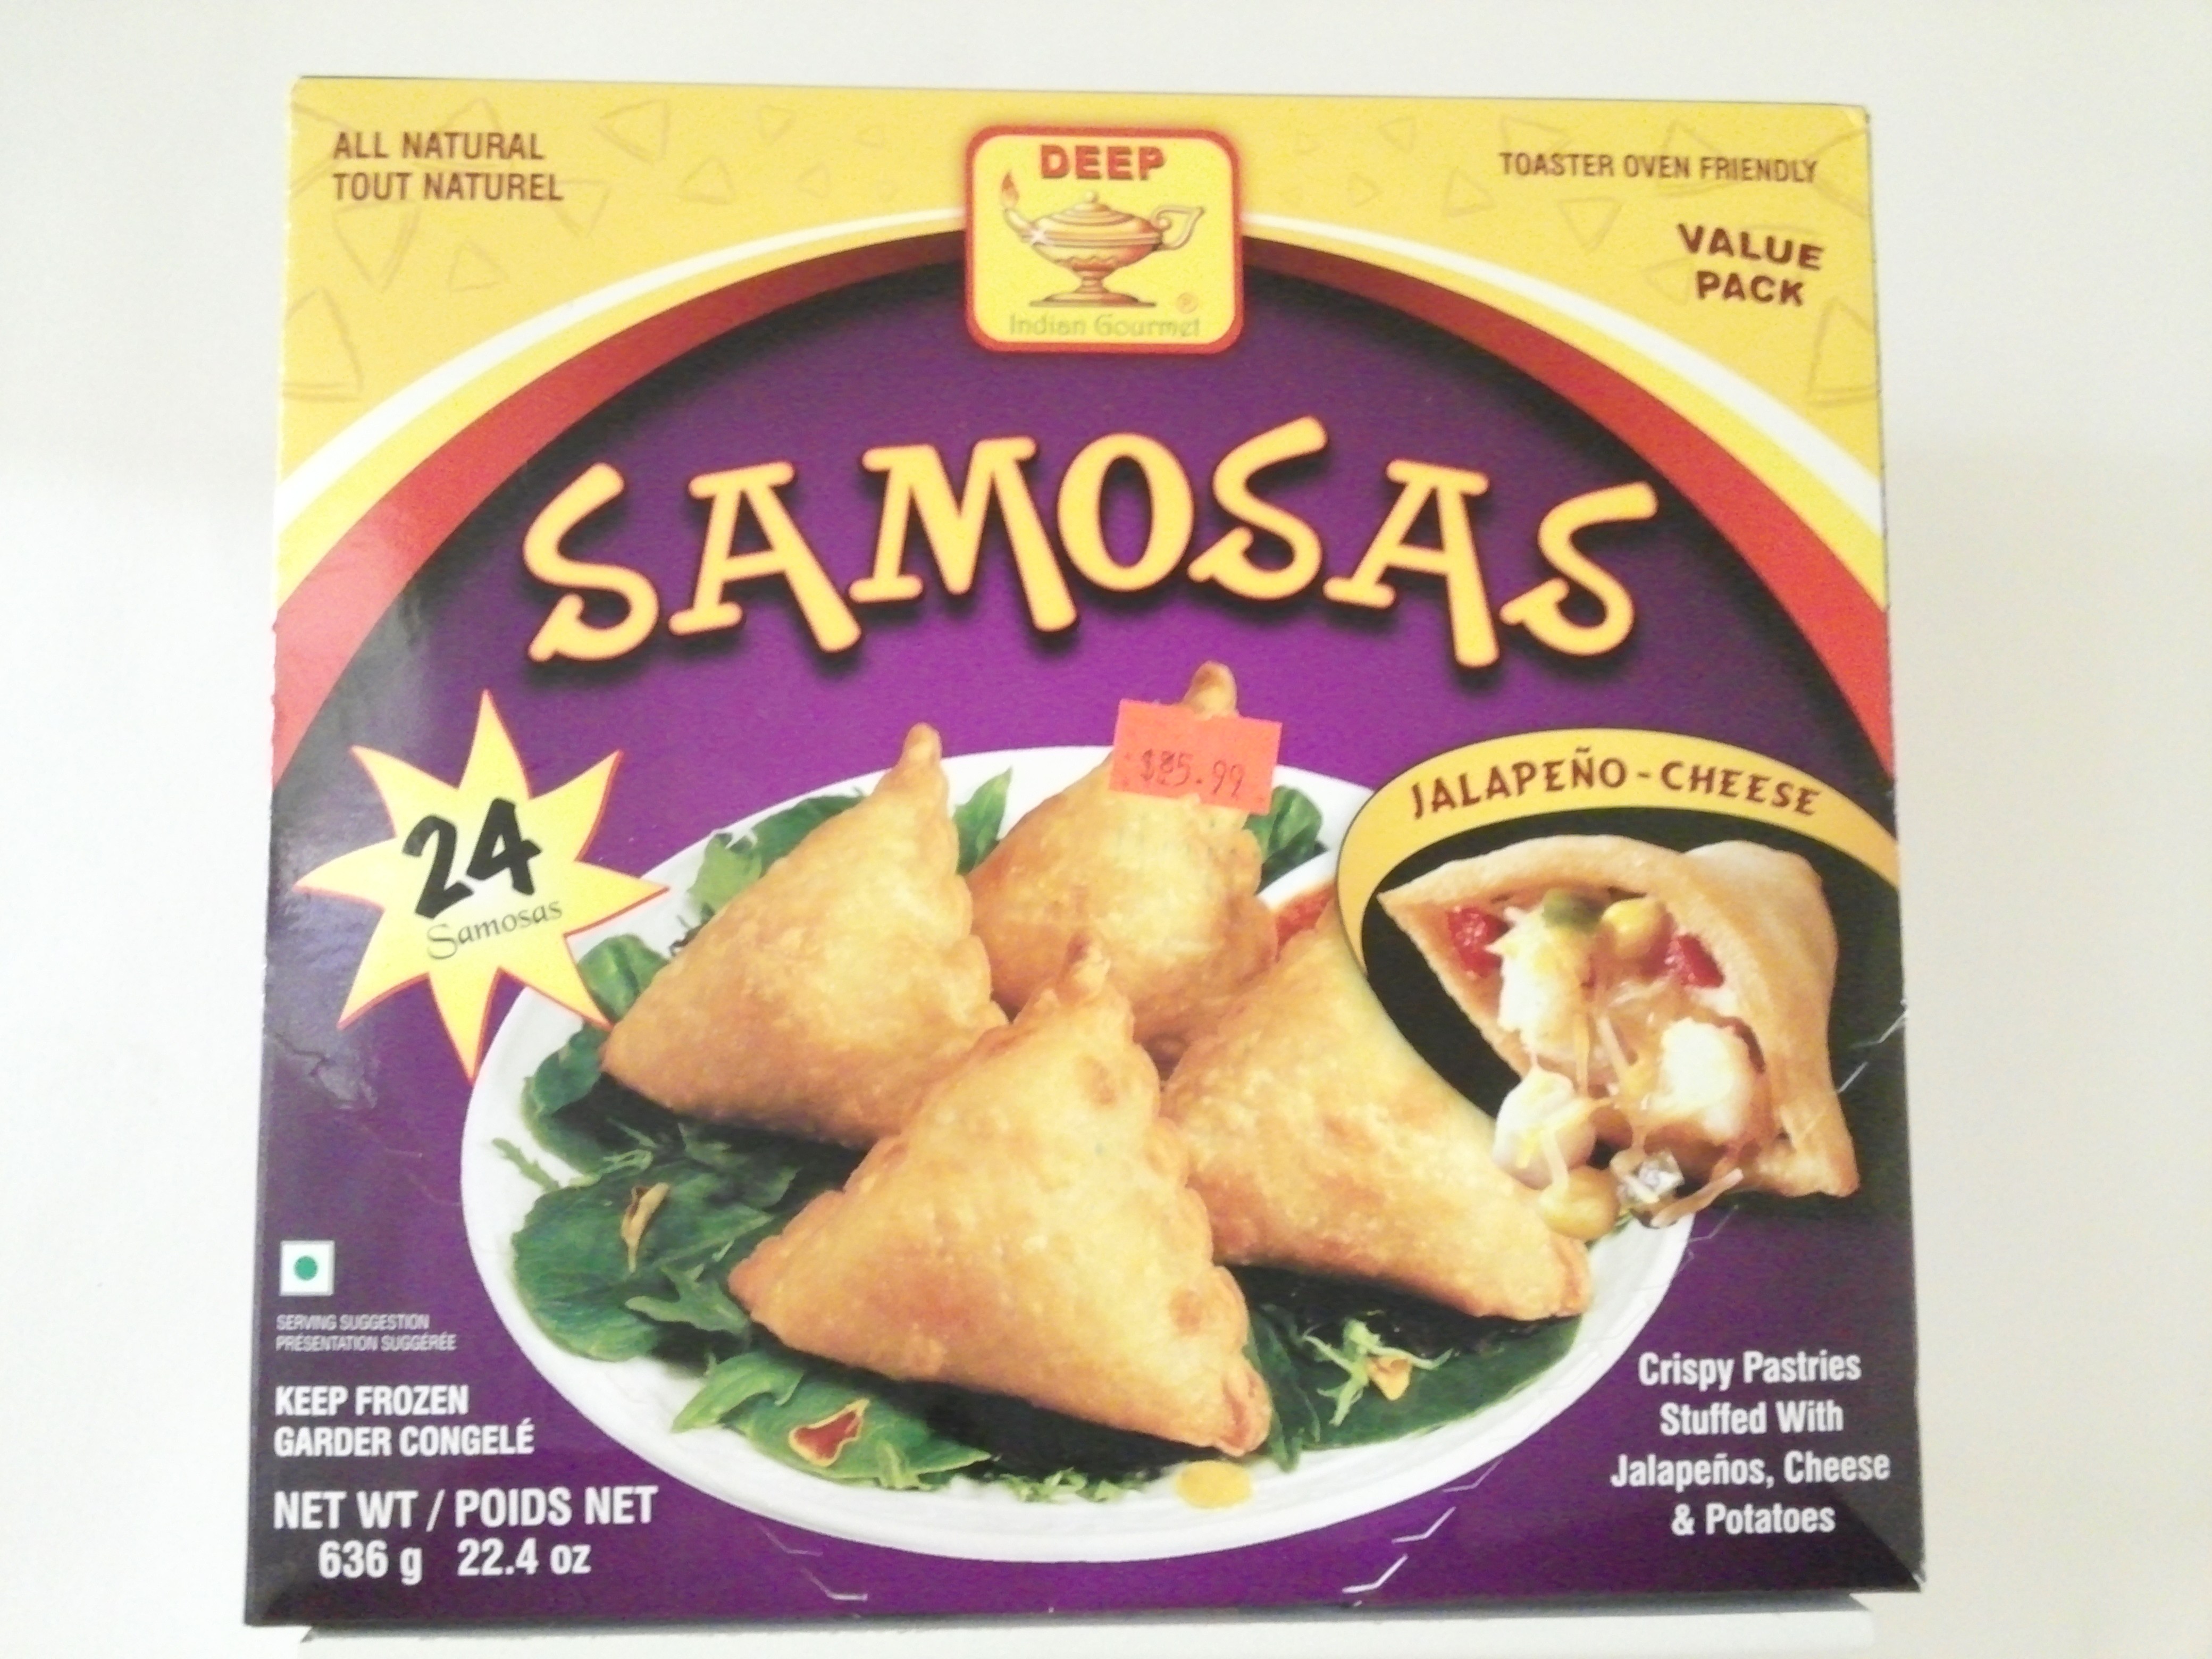 Deep Samosas Jalapeno-Cheese 24 pcs 22.4 oz 